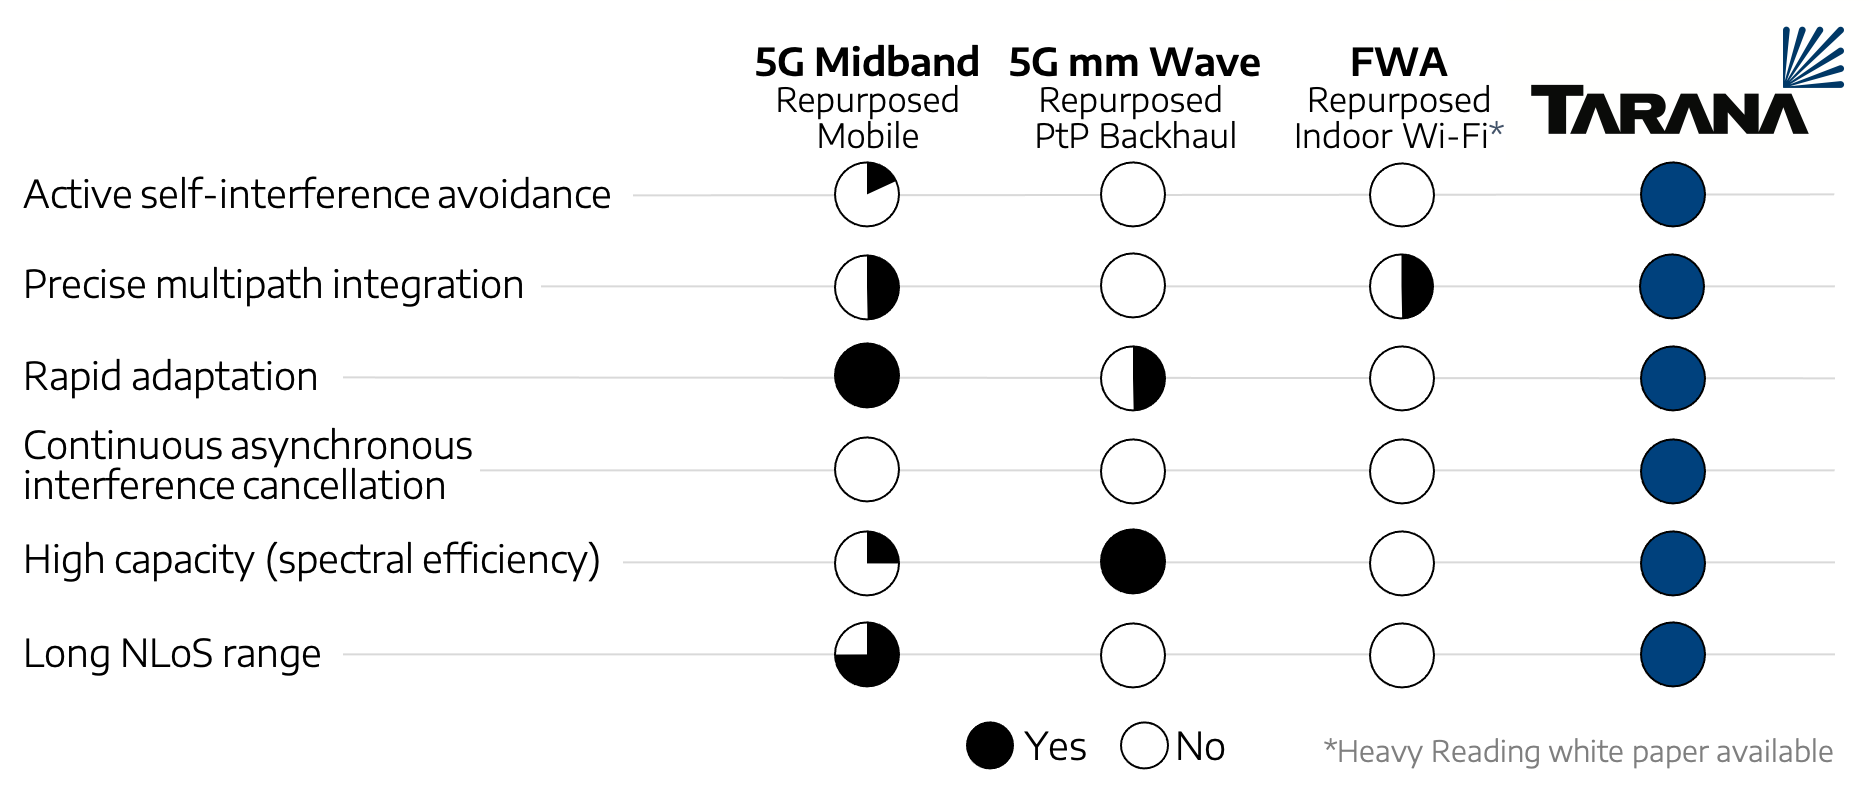 spec-comp-chart